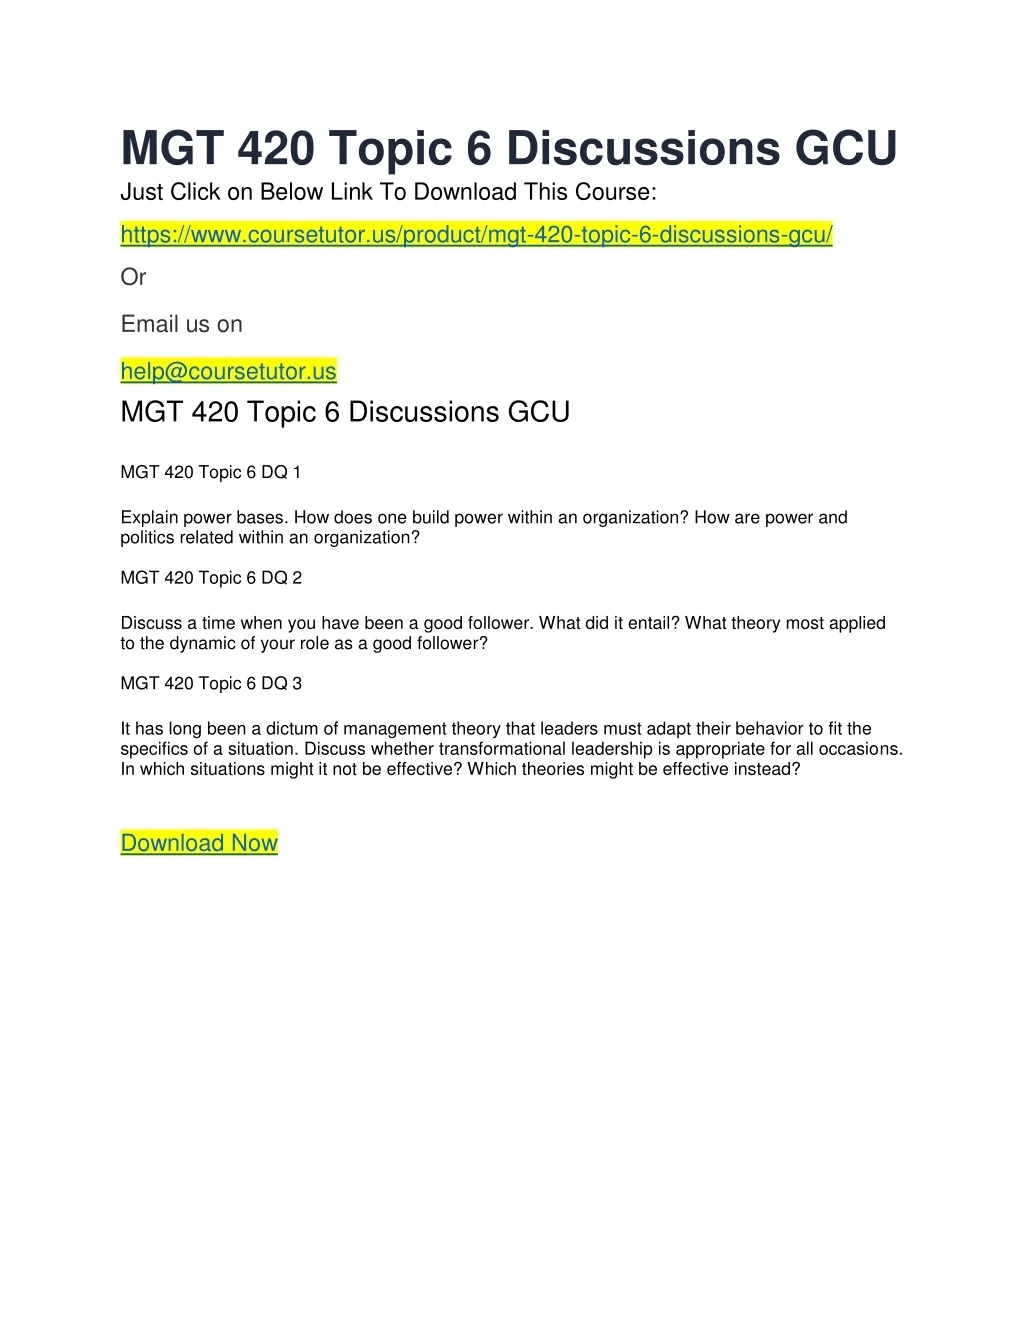 mgt 420 topic 6 discussions gcu just click